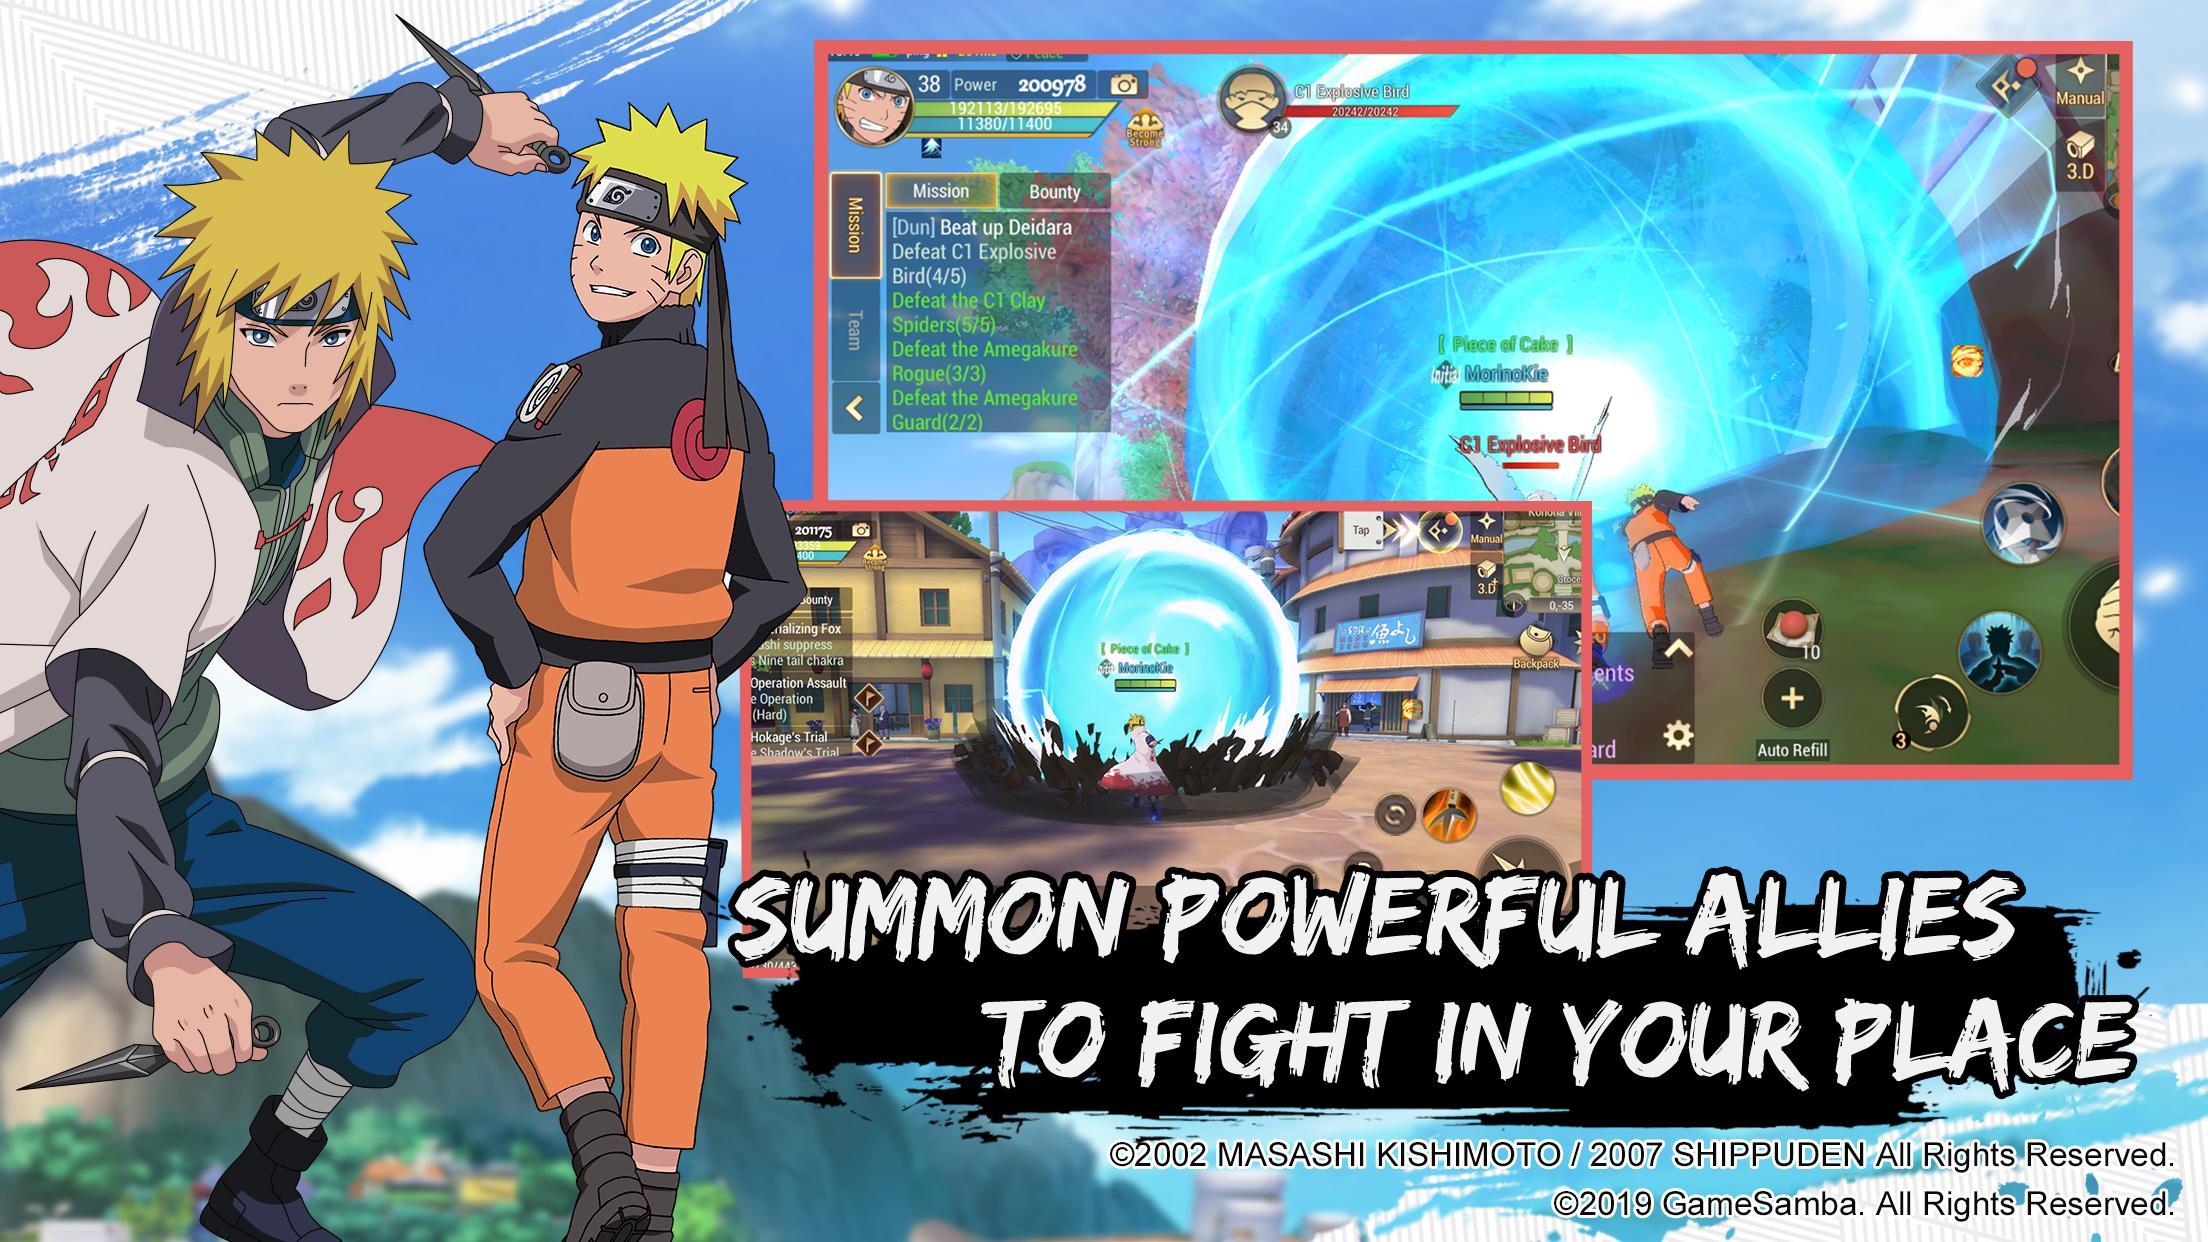 Naruto: Ultimate Storm para Android - Baixe o APK na Uptodown